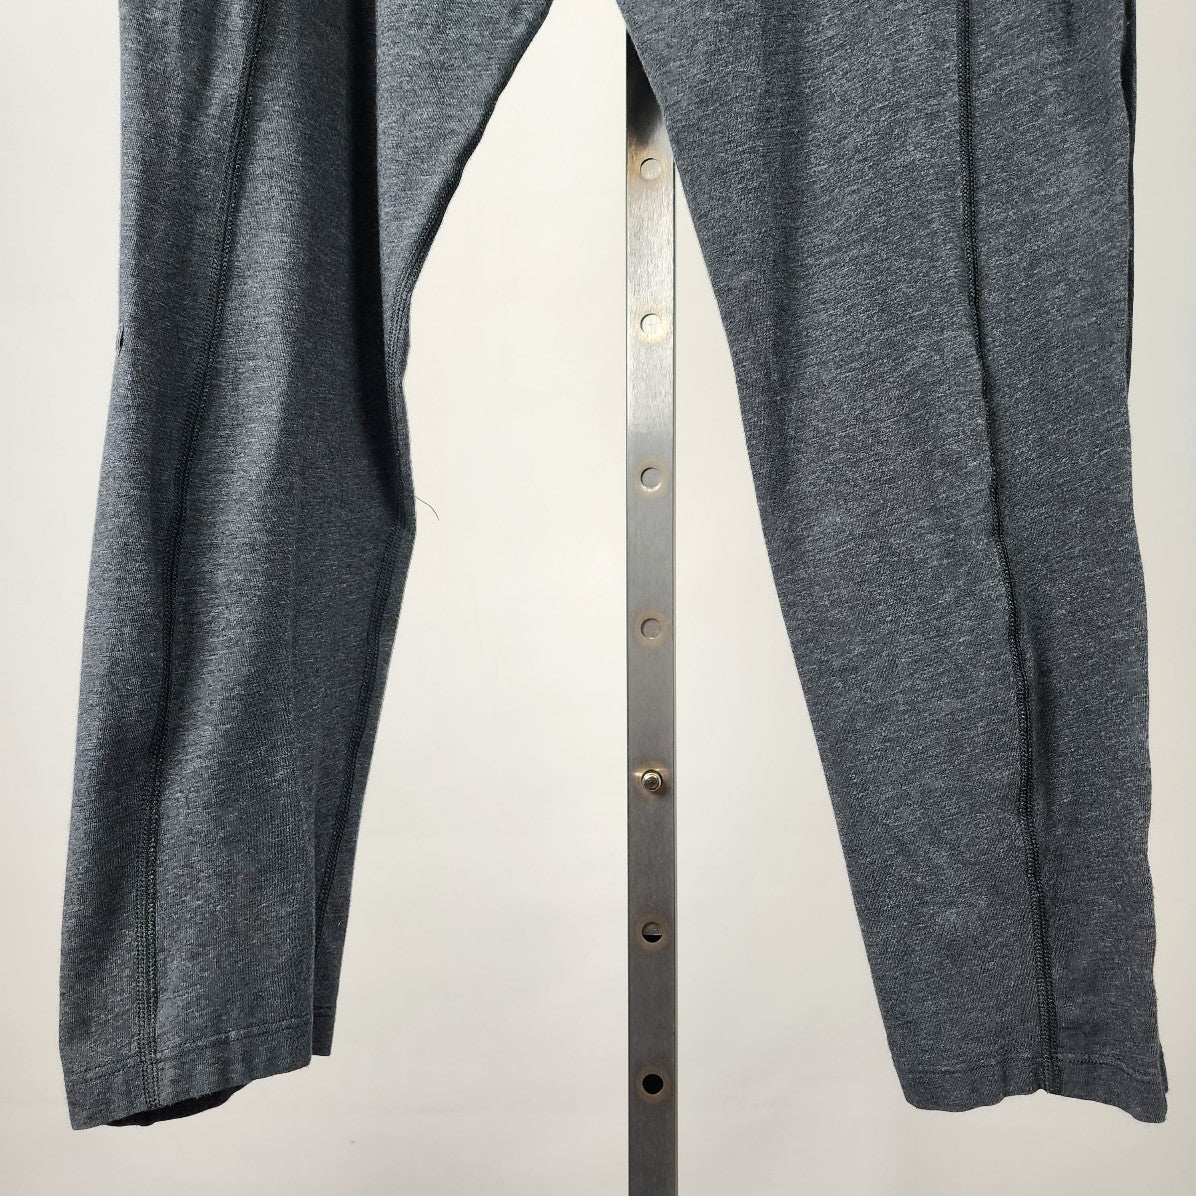 Lululemon Grey Tie One On Pants Leggings Size S/M